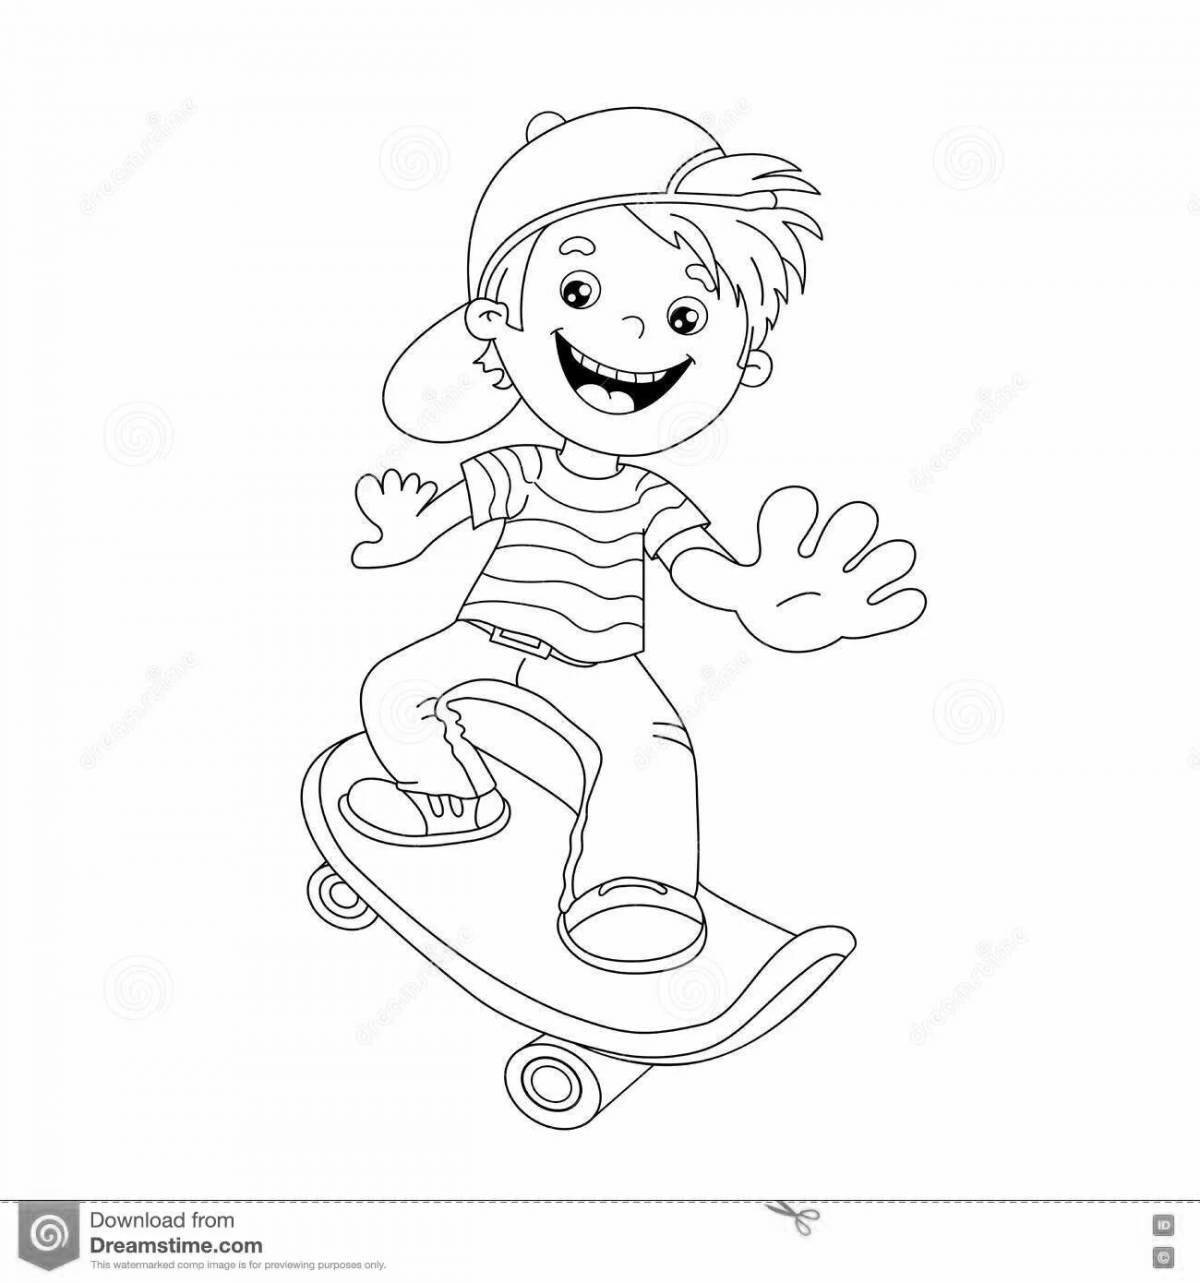 Decisive girl on a skateboard